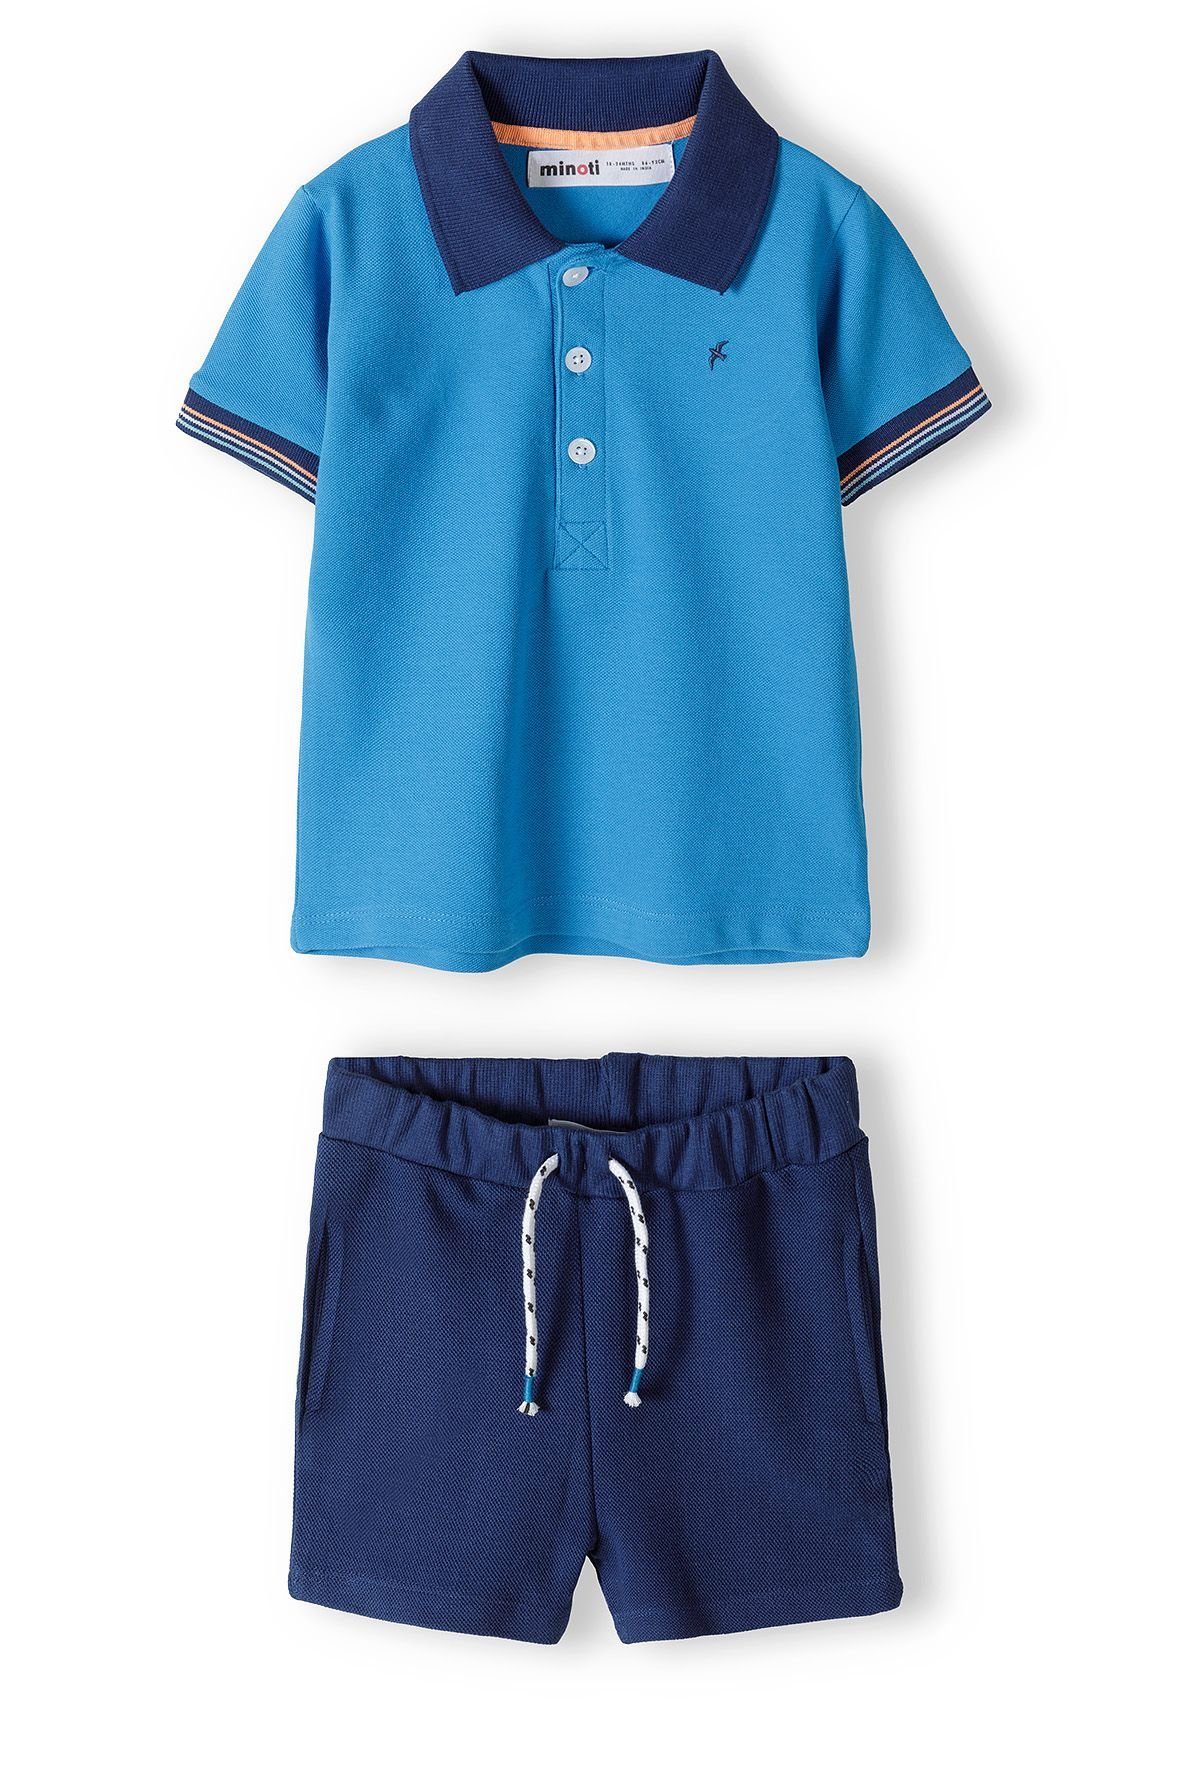 & T-Shirt Polohemd Set Sweatbermudas (3m-3y) und Shorts MINOTI